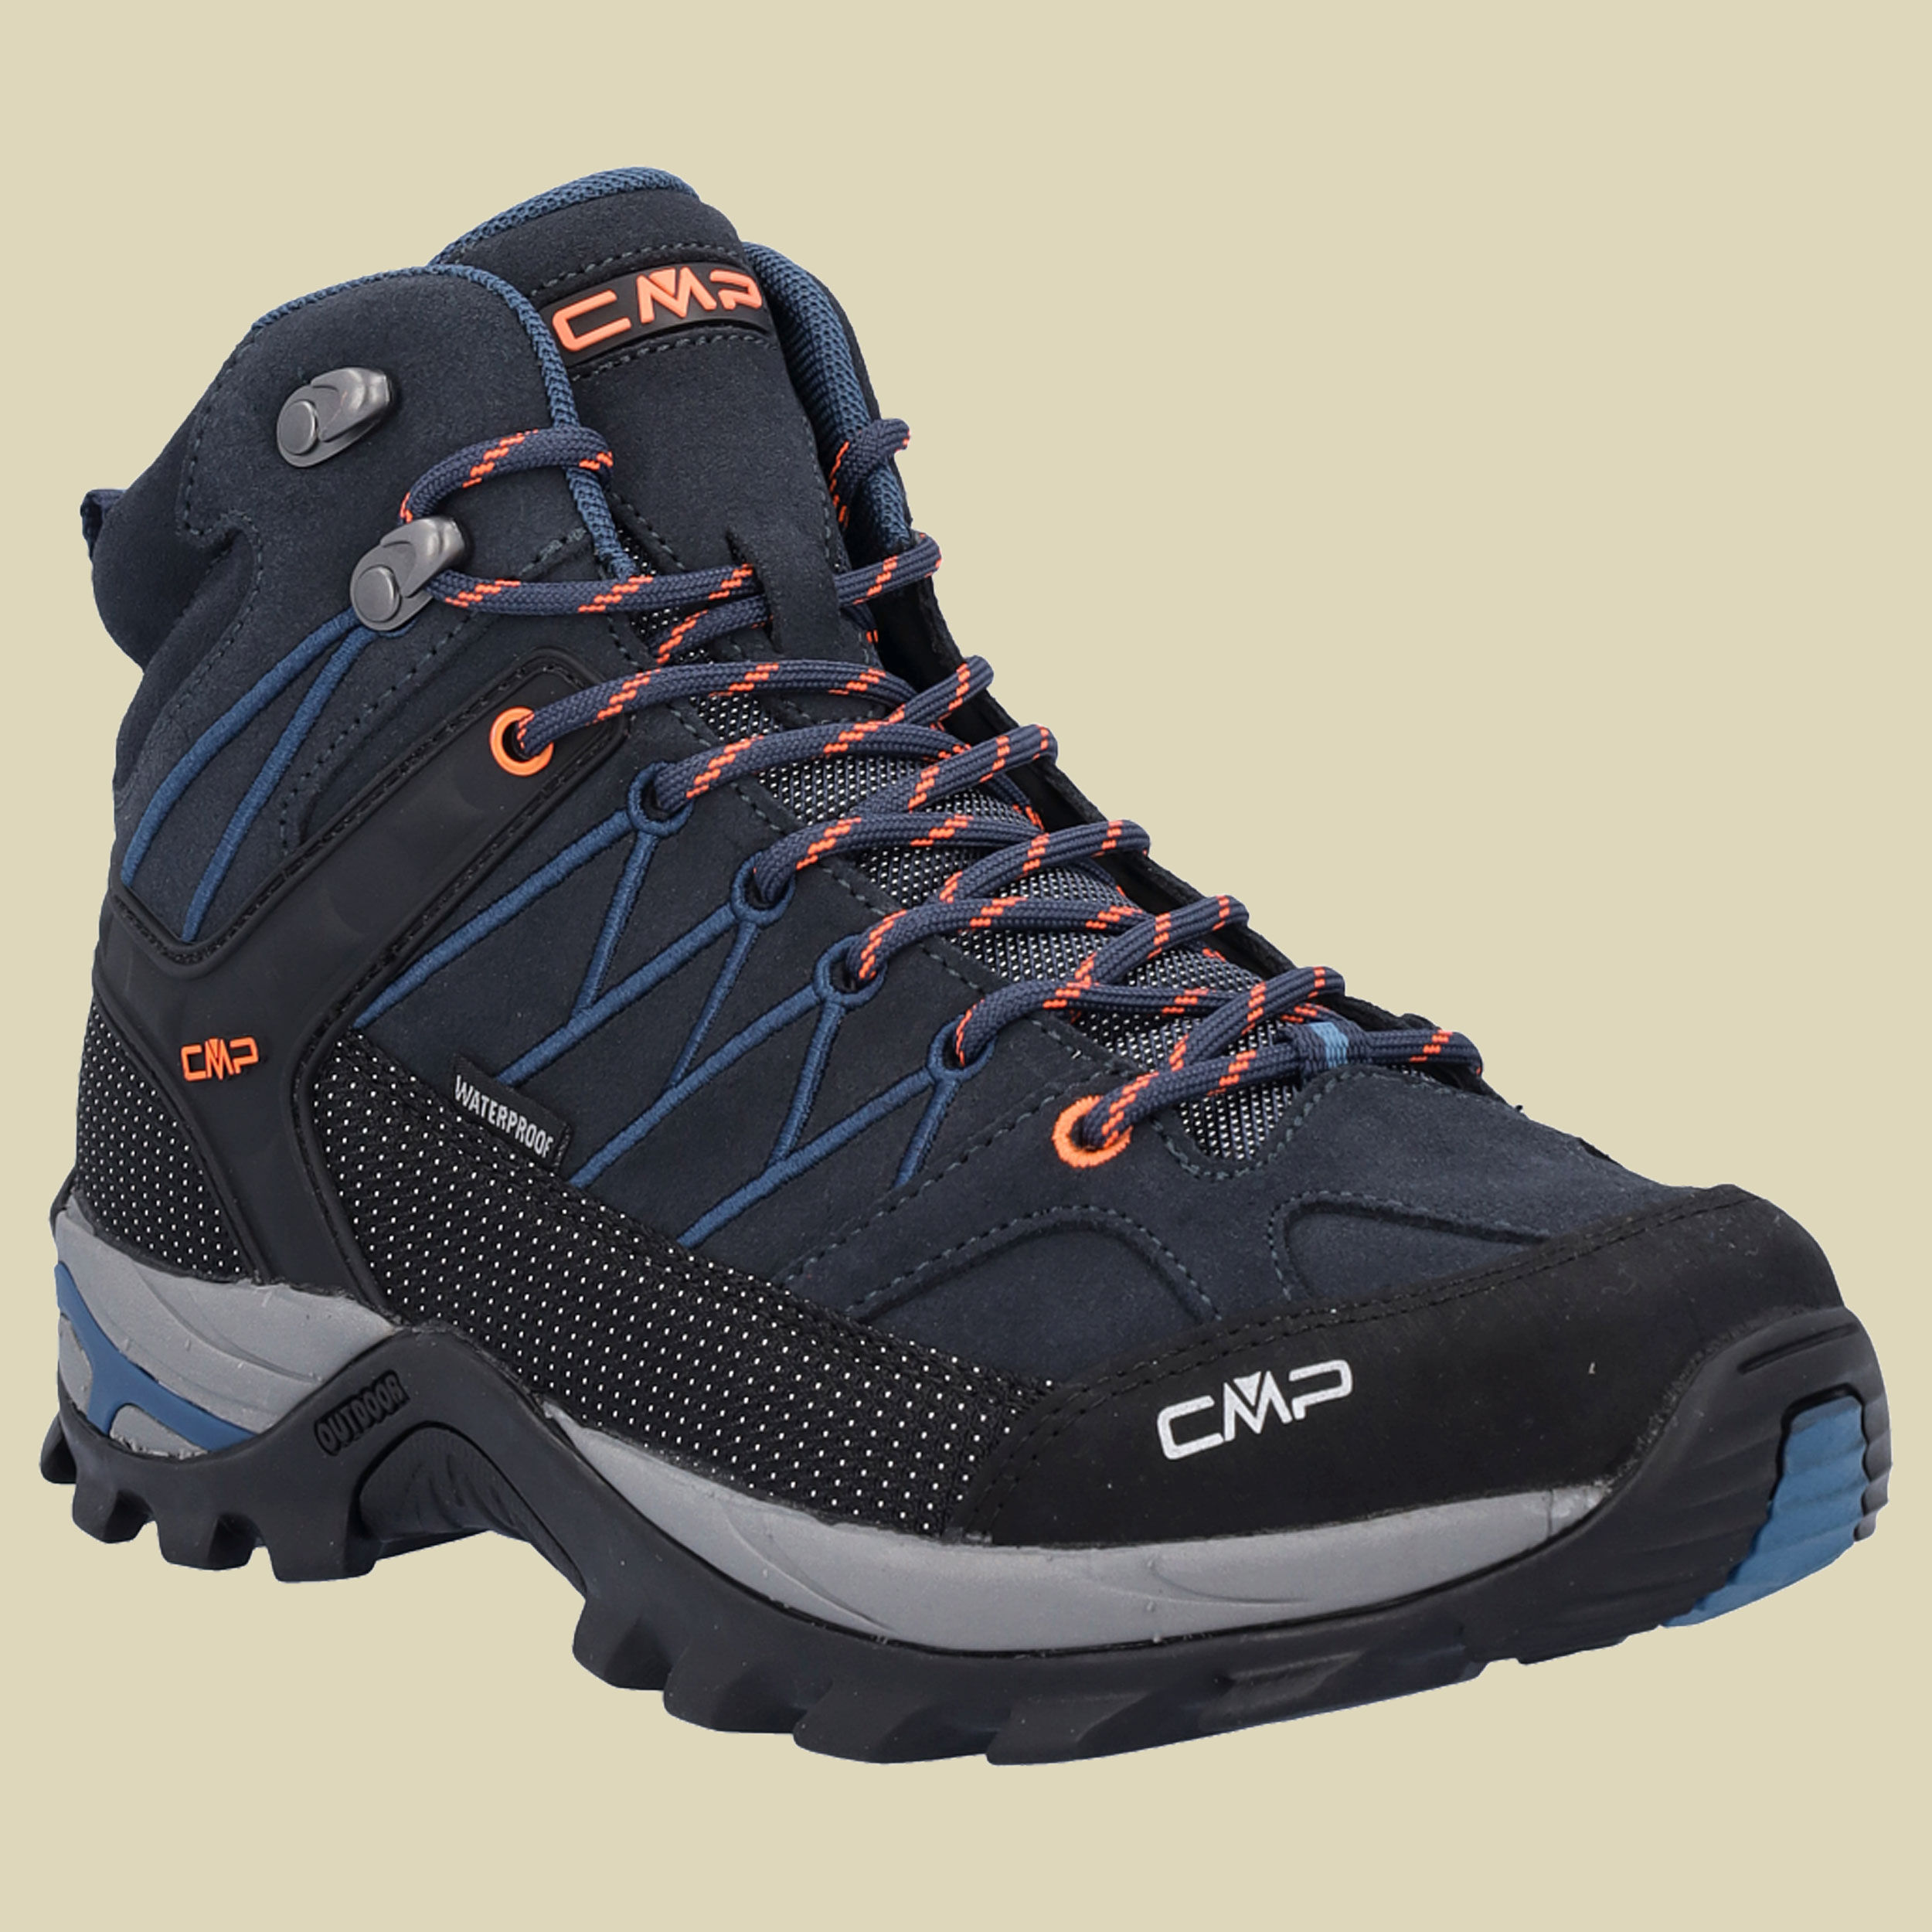 CMP Rigel Mid Trekking Shoes WP Men Größe 41 Farbe 27NM b.blue-flash orange